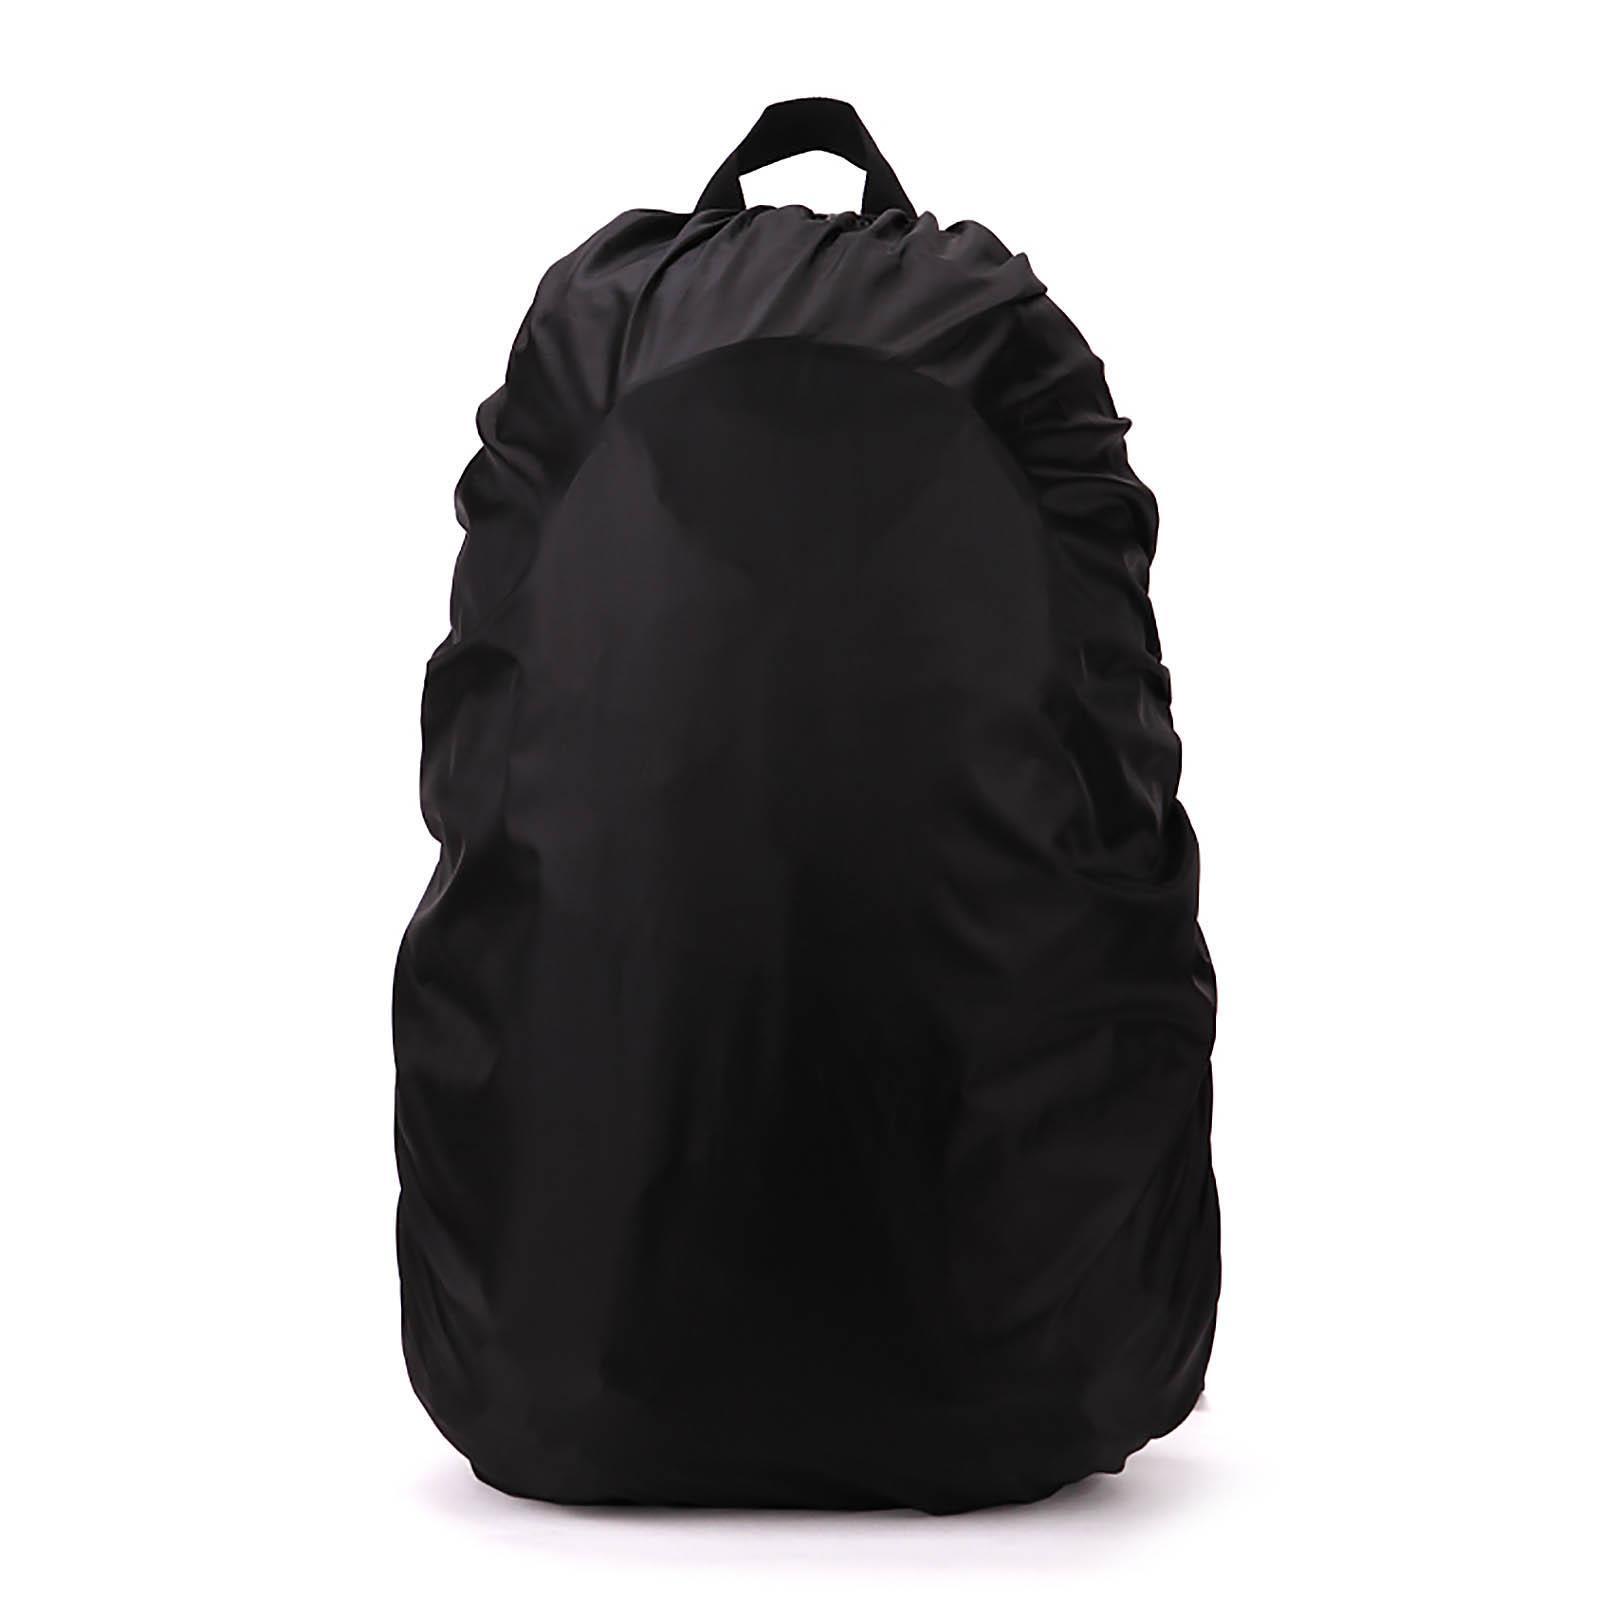 Outdoors appliances Hiking Camping Backpack Bag Waterproof Rainproof Dust Cover